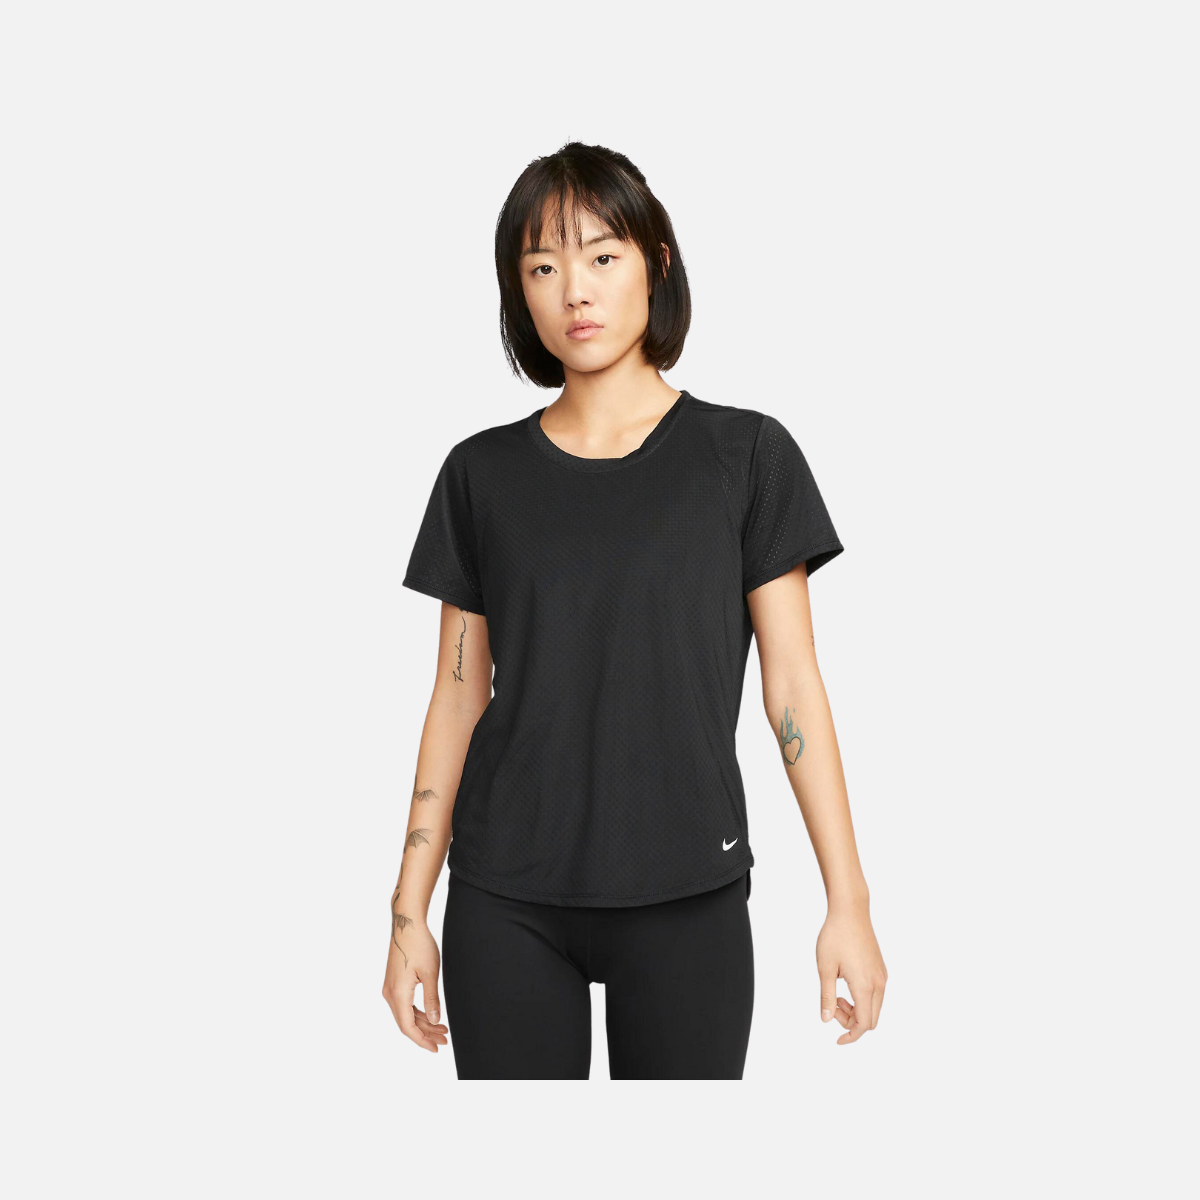 Nike Dry-Fit one breath Women short sleeve T-shirt - Black/White